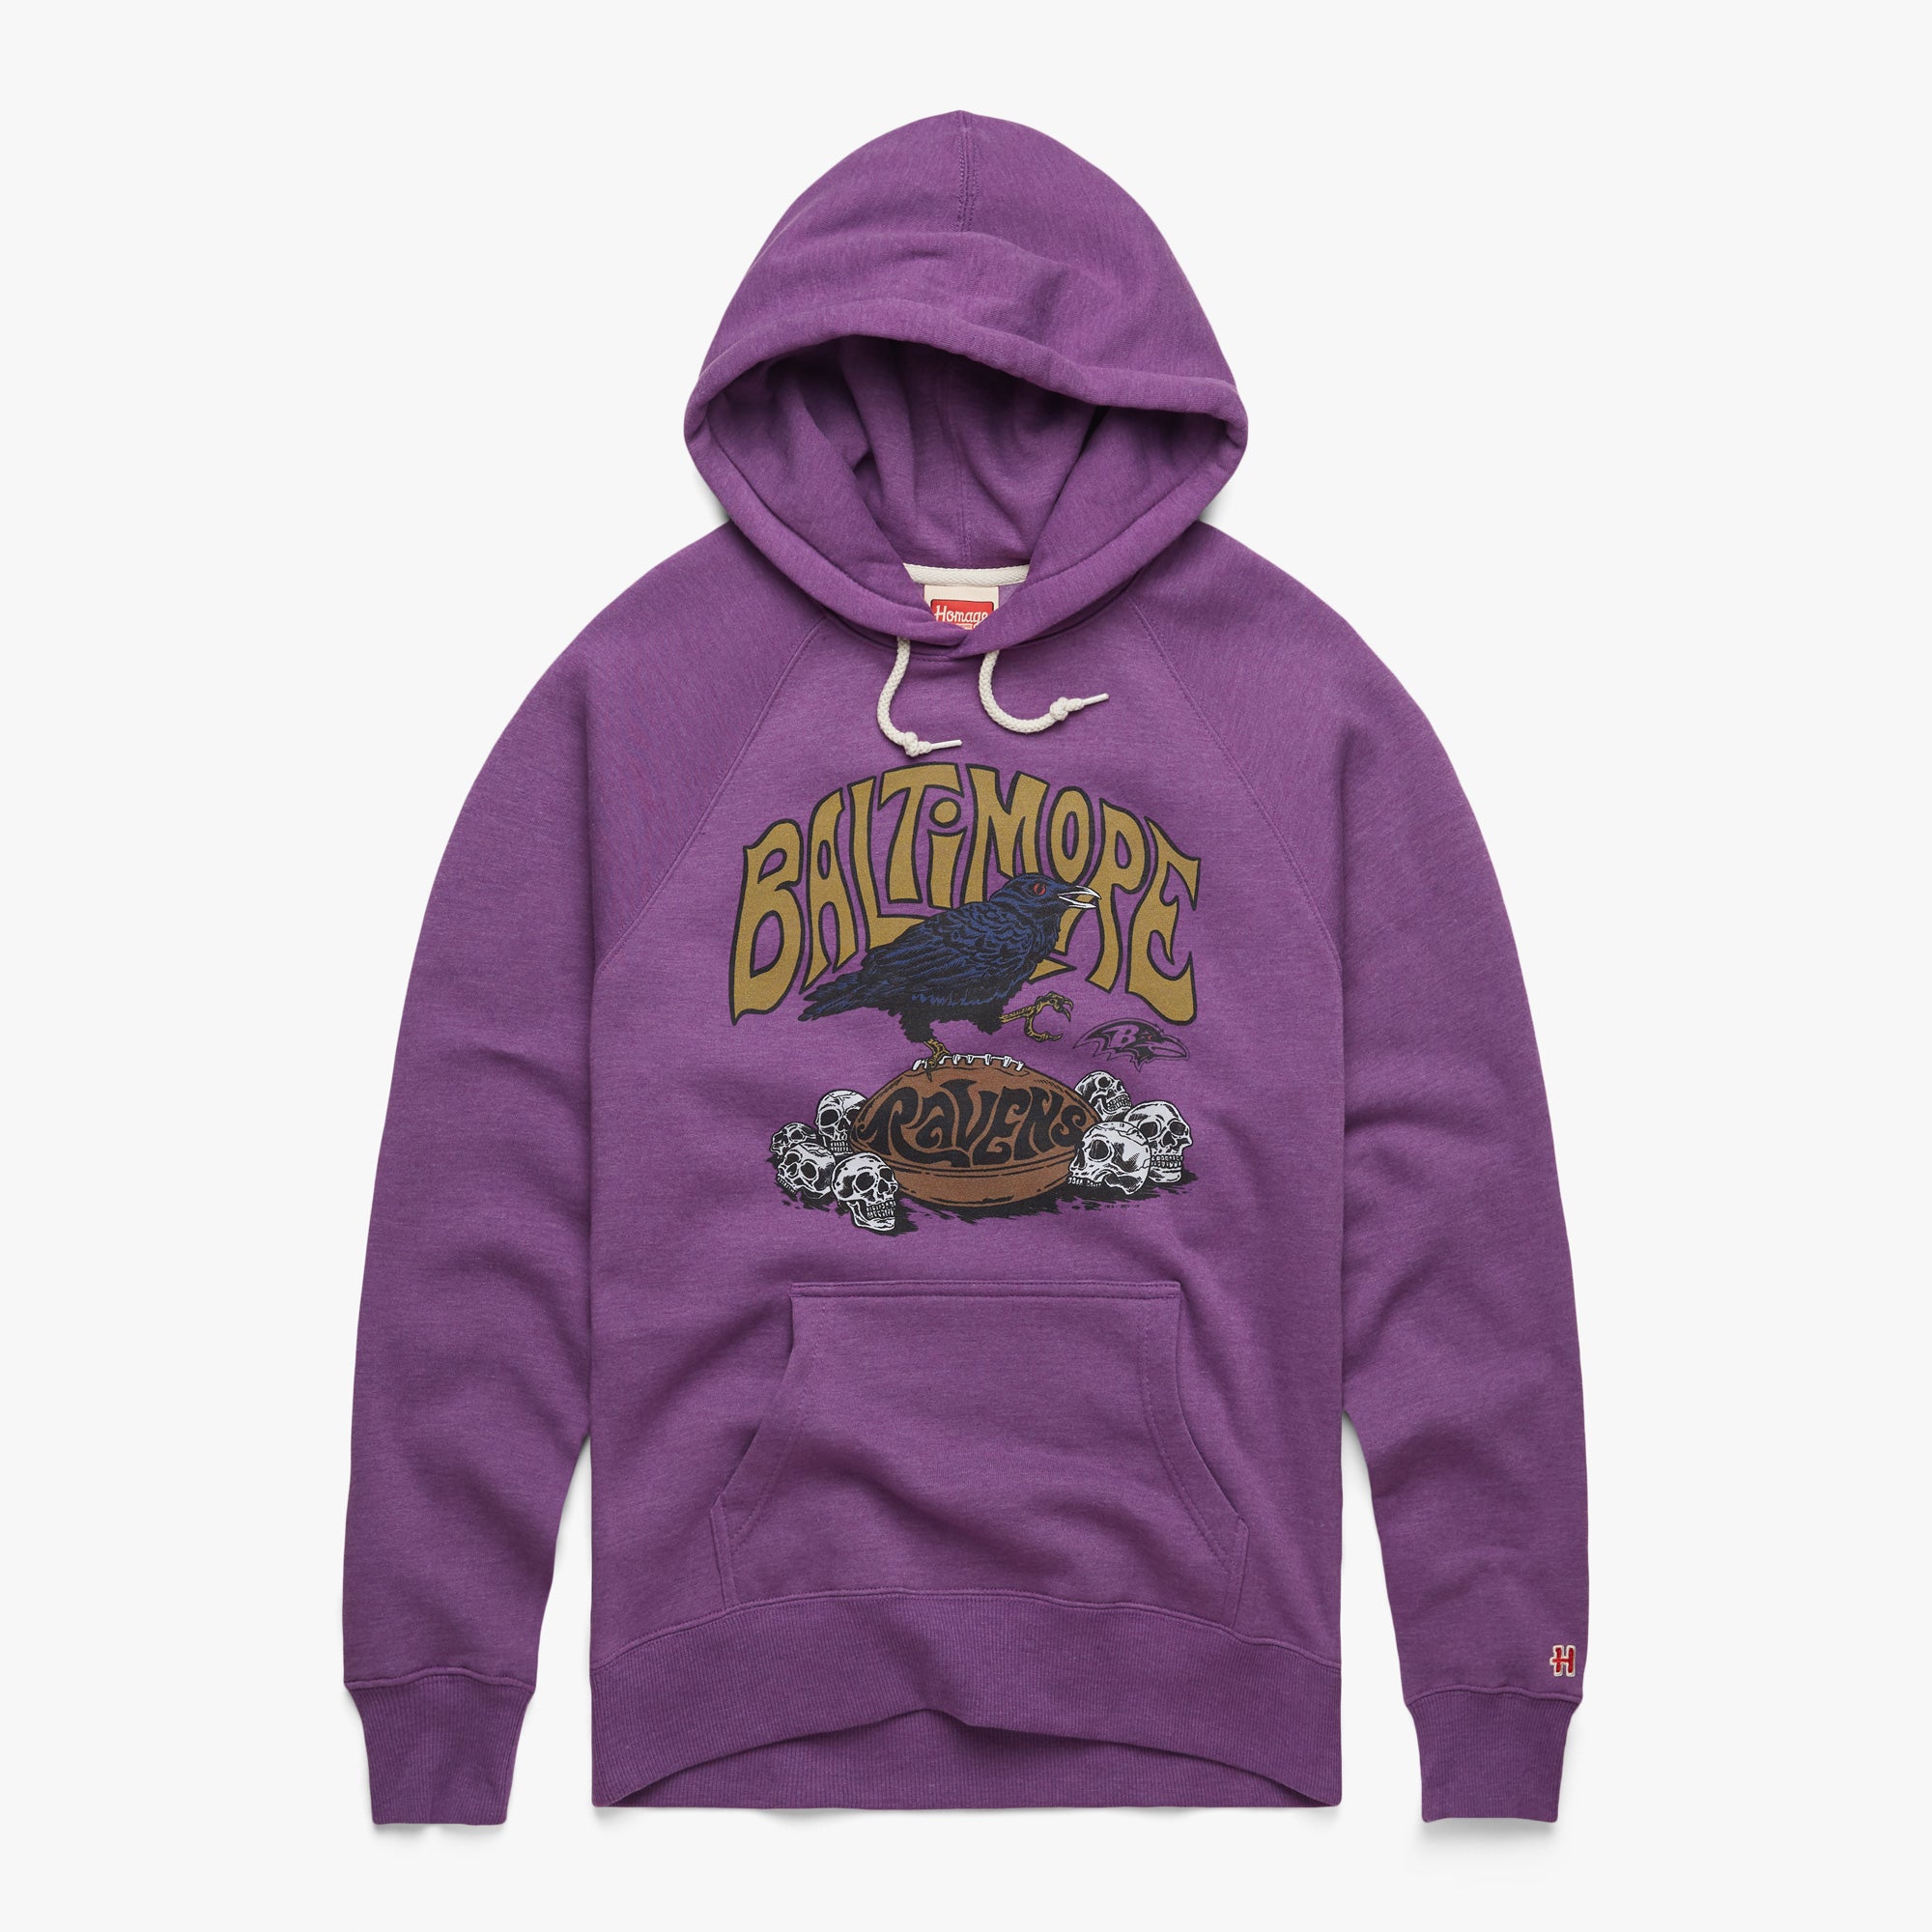 baltimore ravens sweatshirts clearance